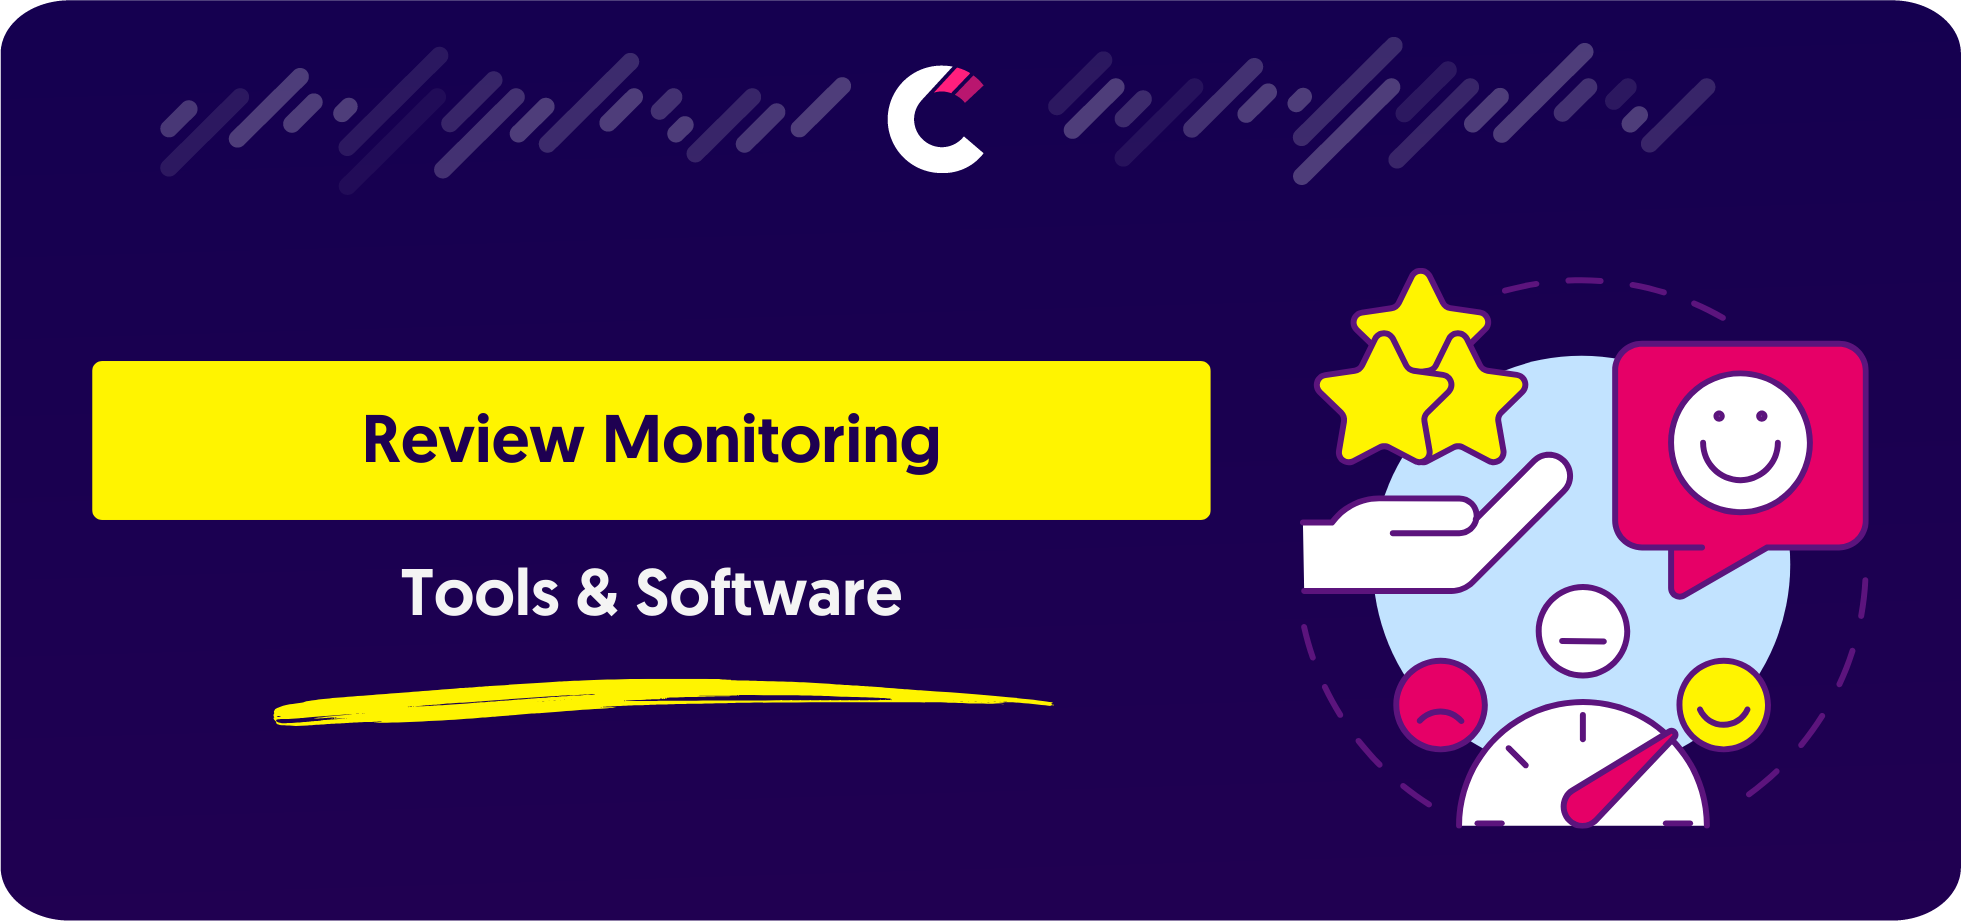 Review Monitoring (Tools & Software)